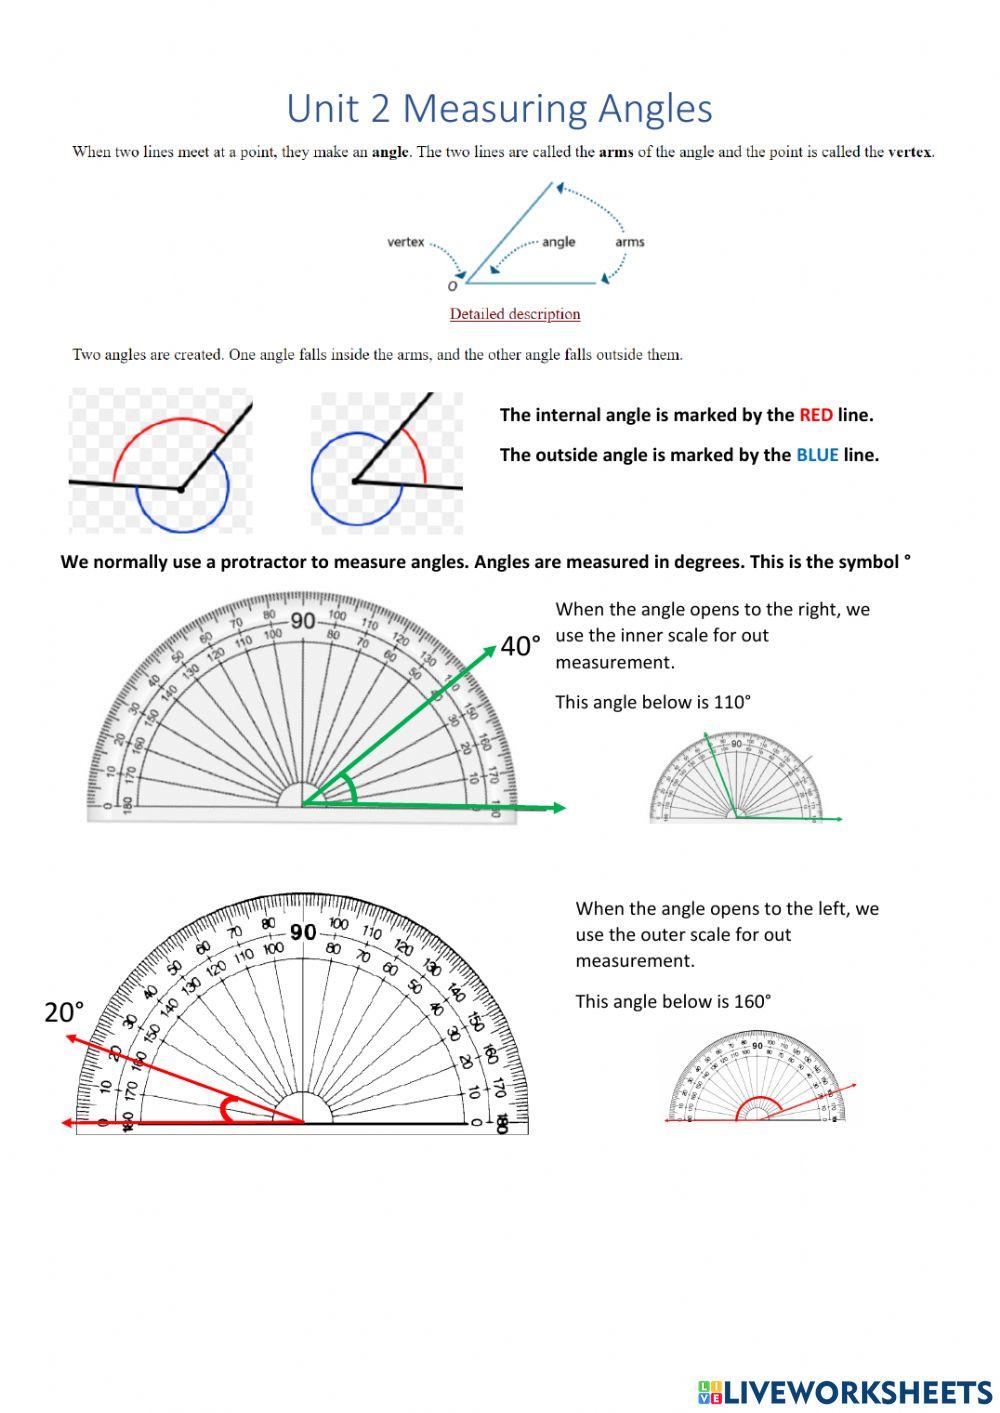 CHILL5 Math Unit 2 Angles Measuring 1